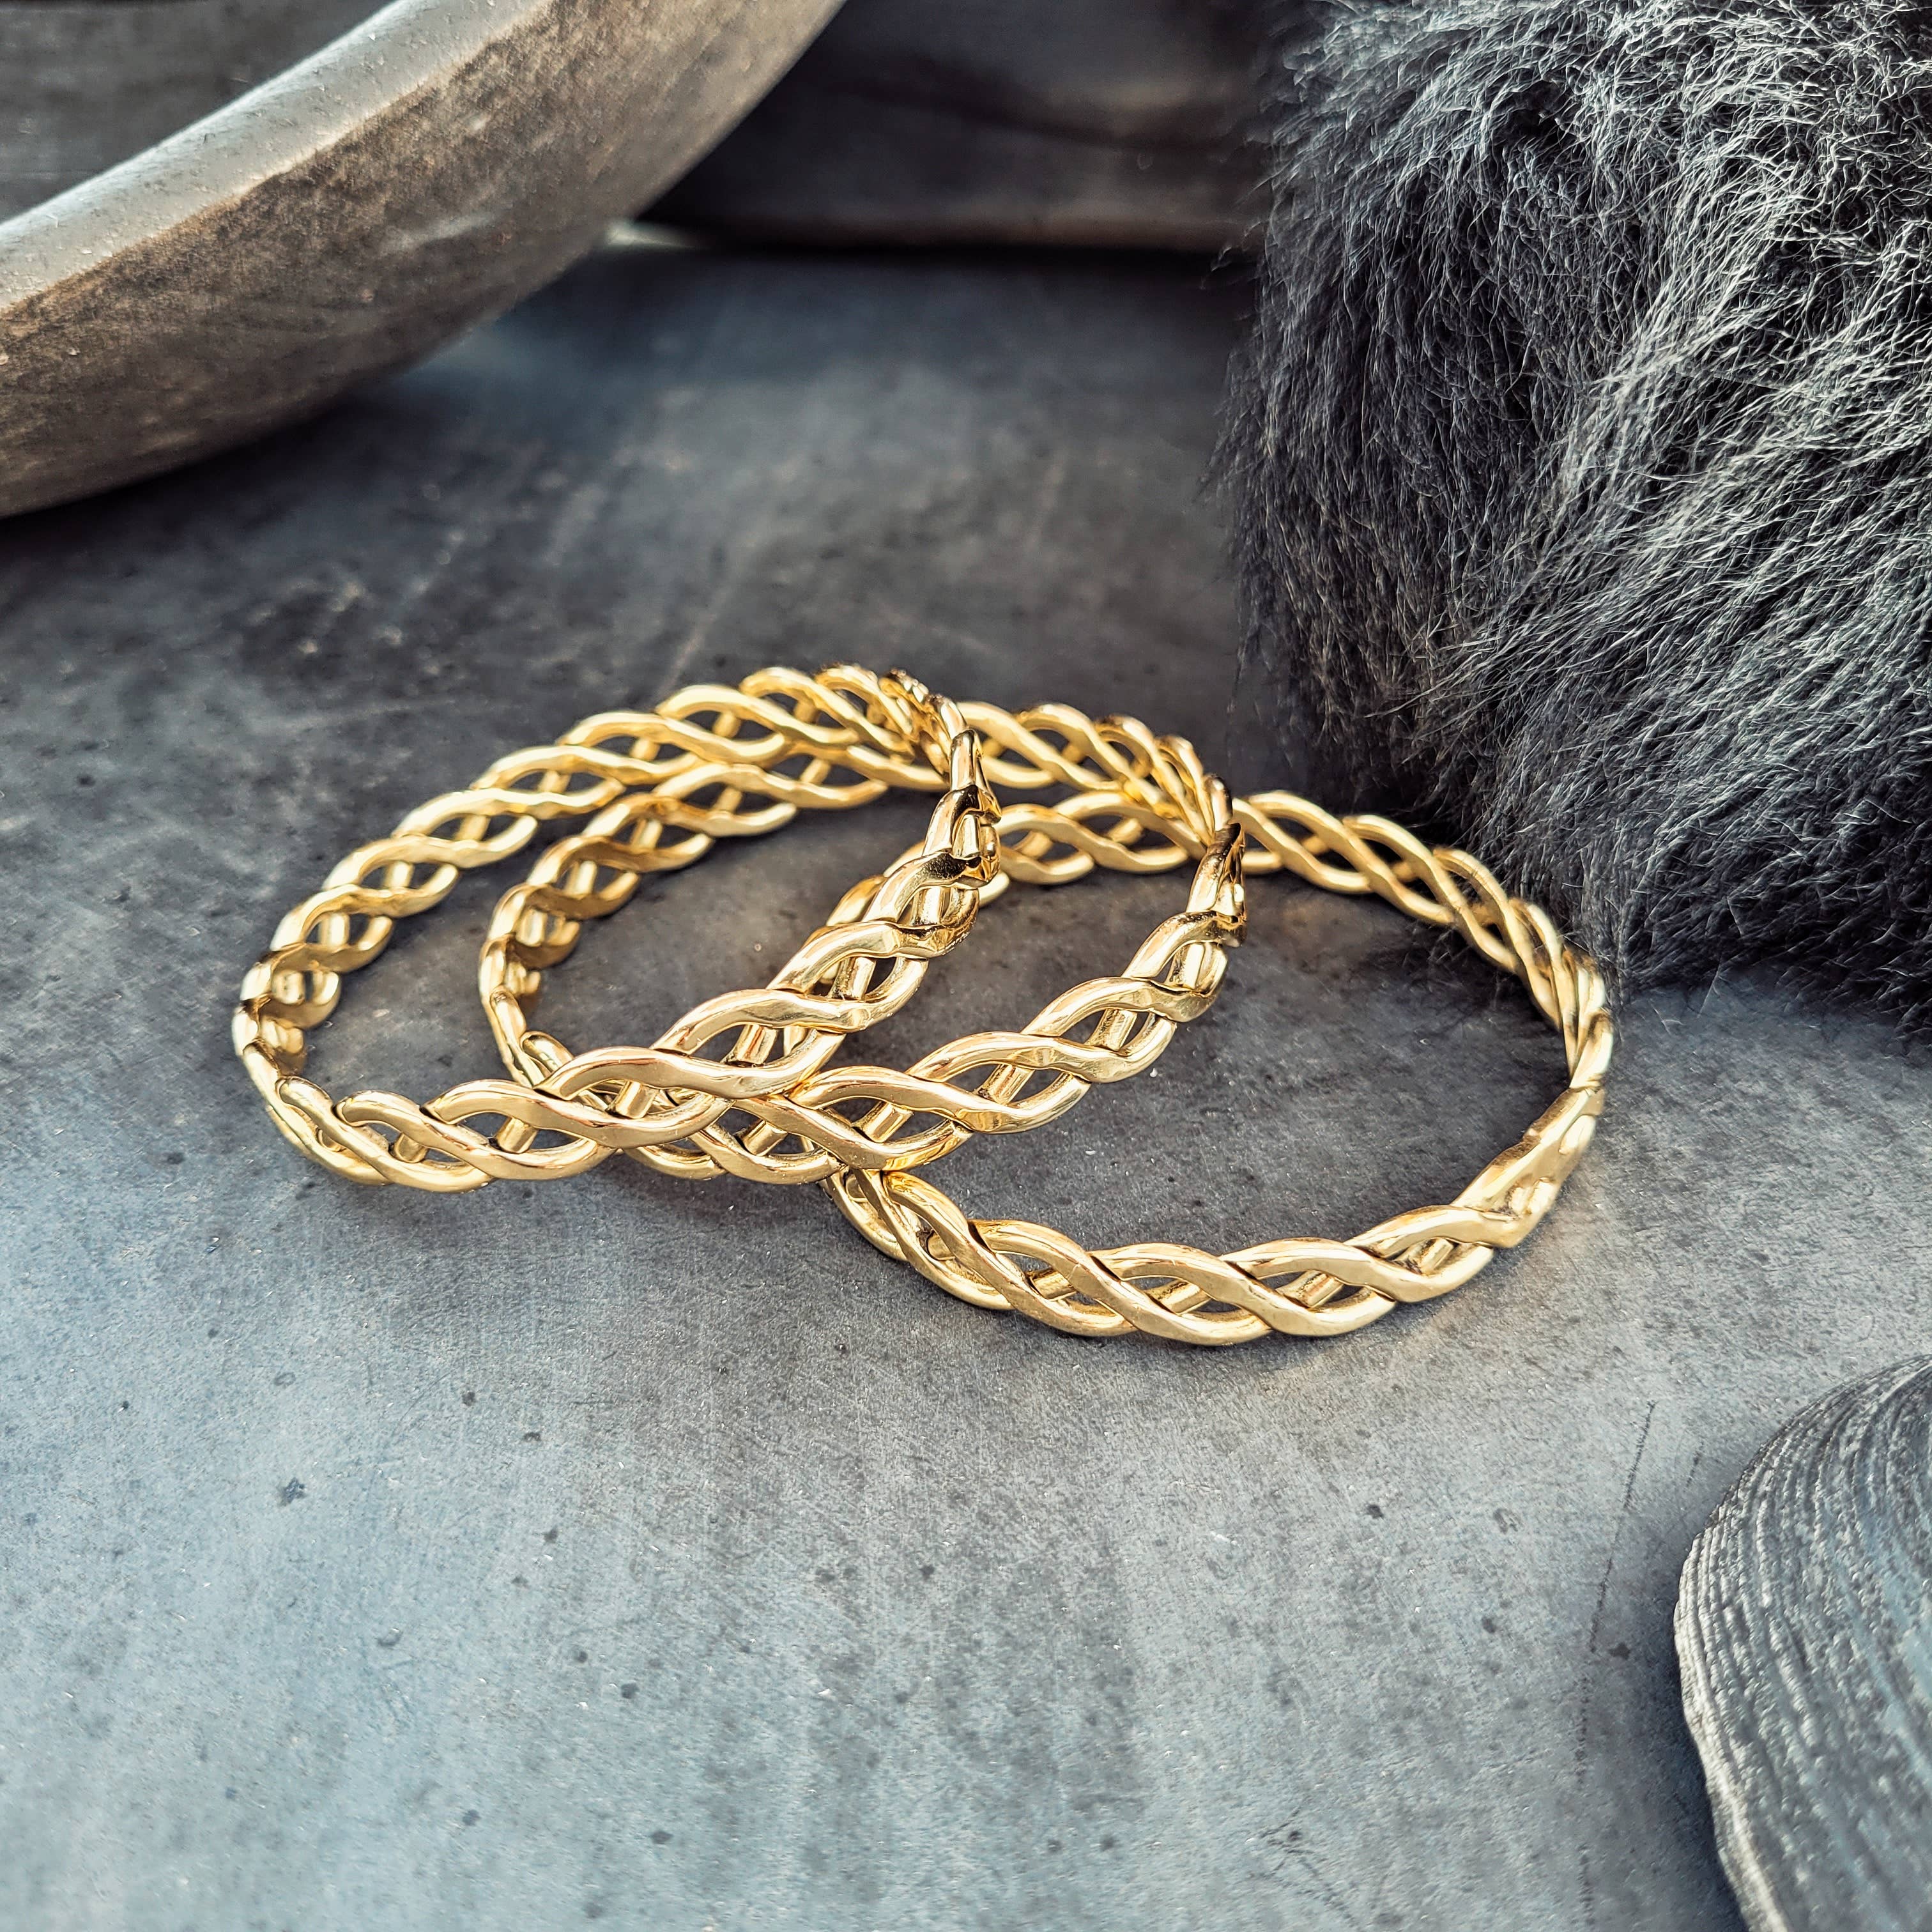 Handcrafted brass bangle bracelet braided twist style